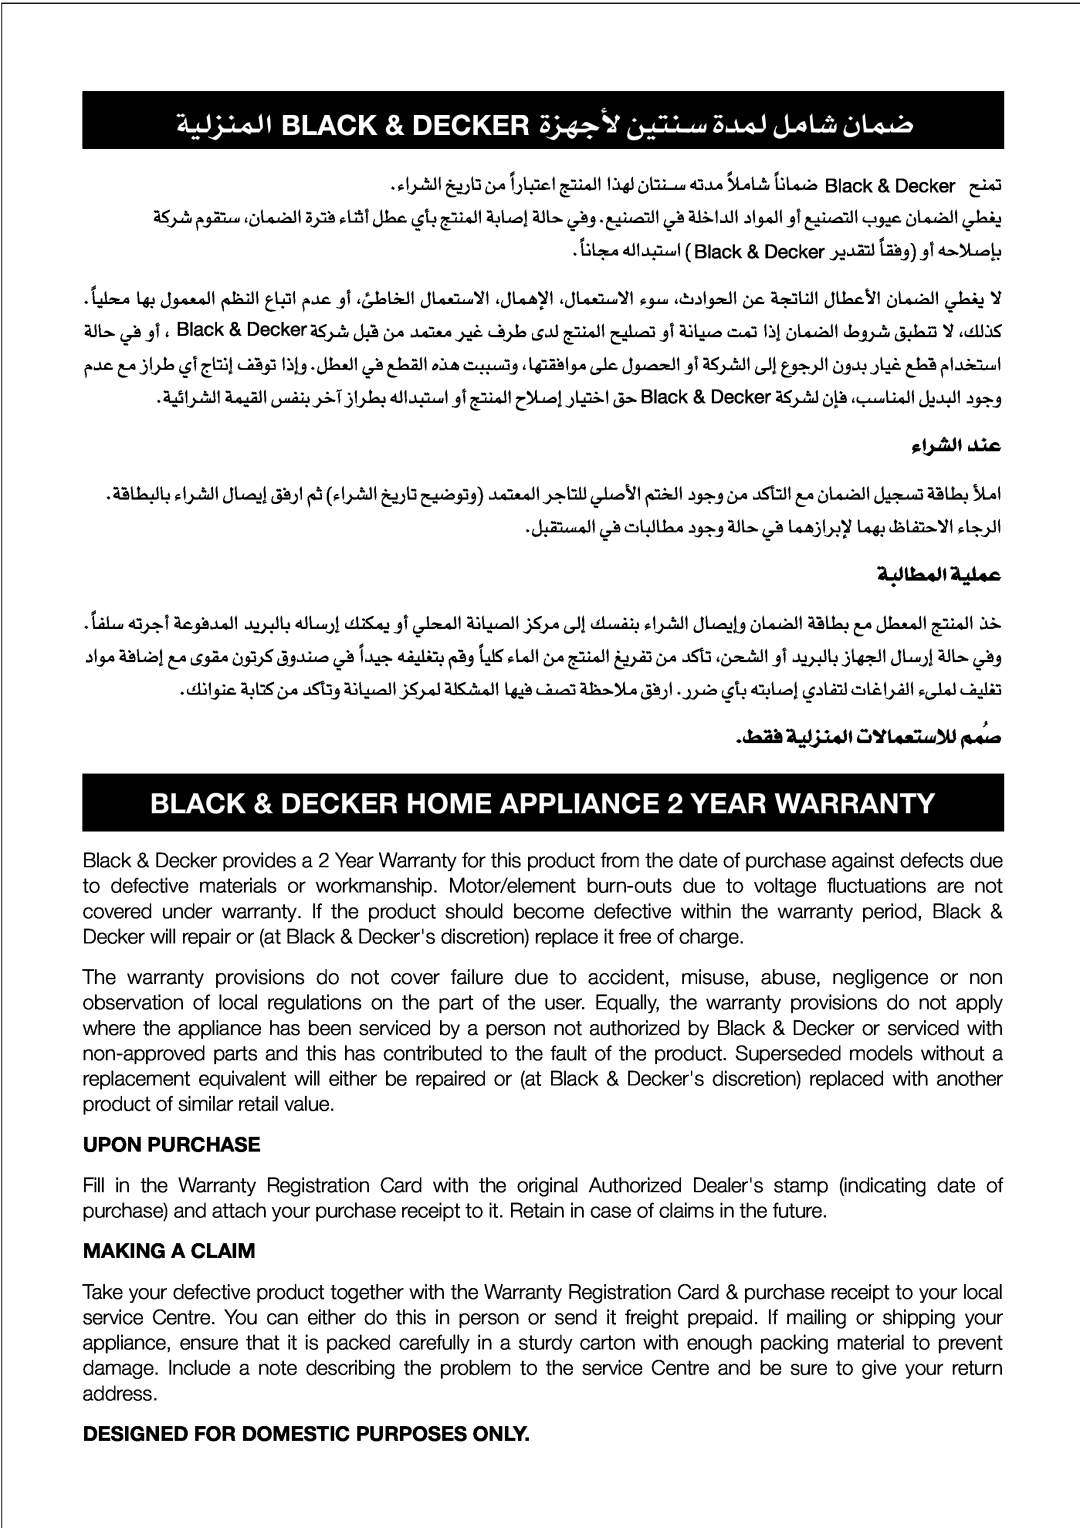 Black & Decker MY23PG manual BLACK & DECKER HOME APPLIANCE 2 YEAR WARRANTY, Upon Purchase, Making A Claim 